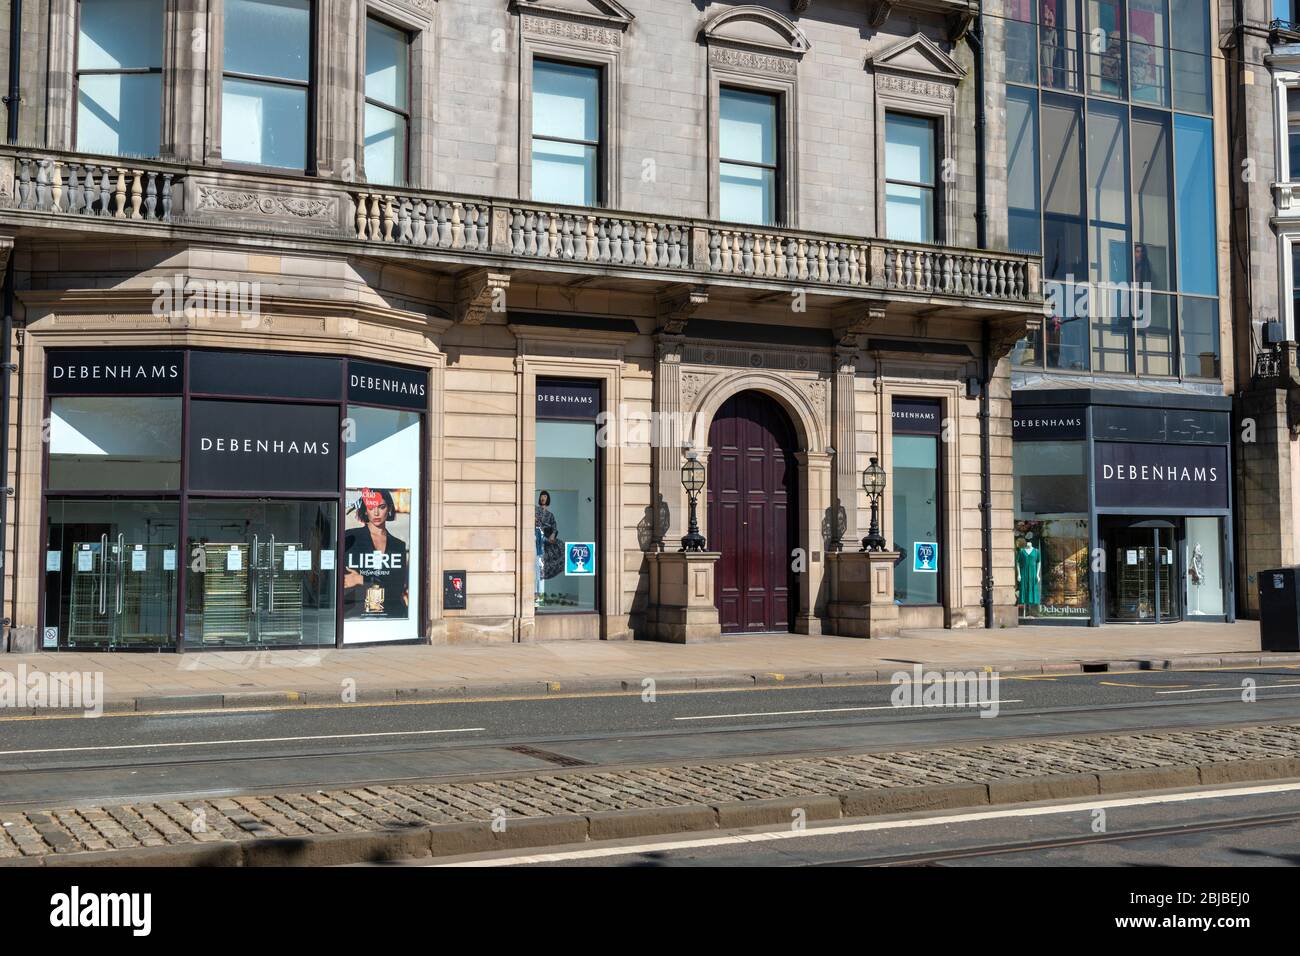 Debenhams Department Store on Princes Street closed for business during coronavirus lockdown - Edinburgh, Scotland, UK Stock Photo